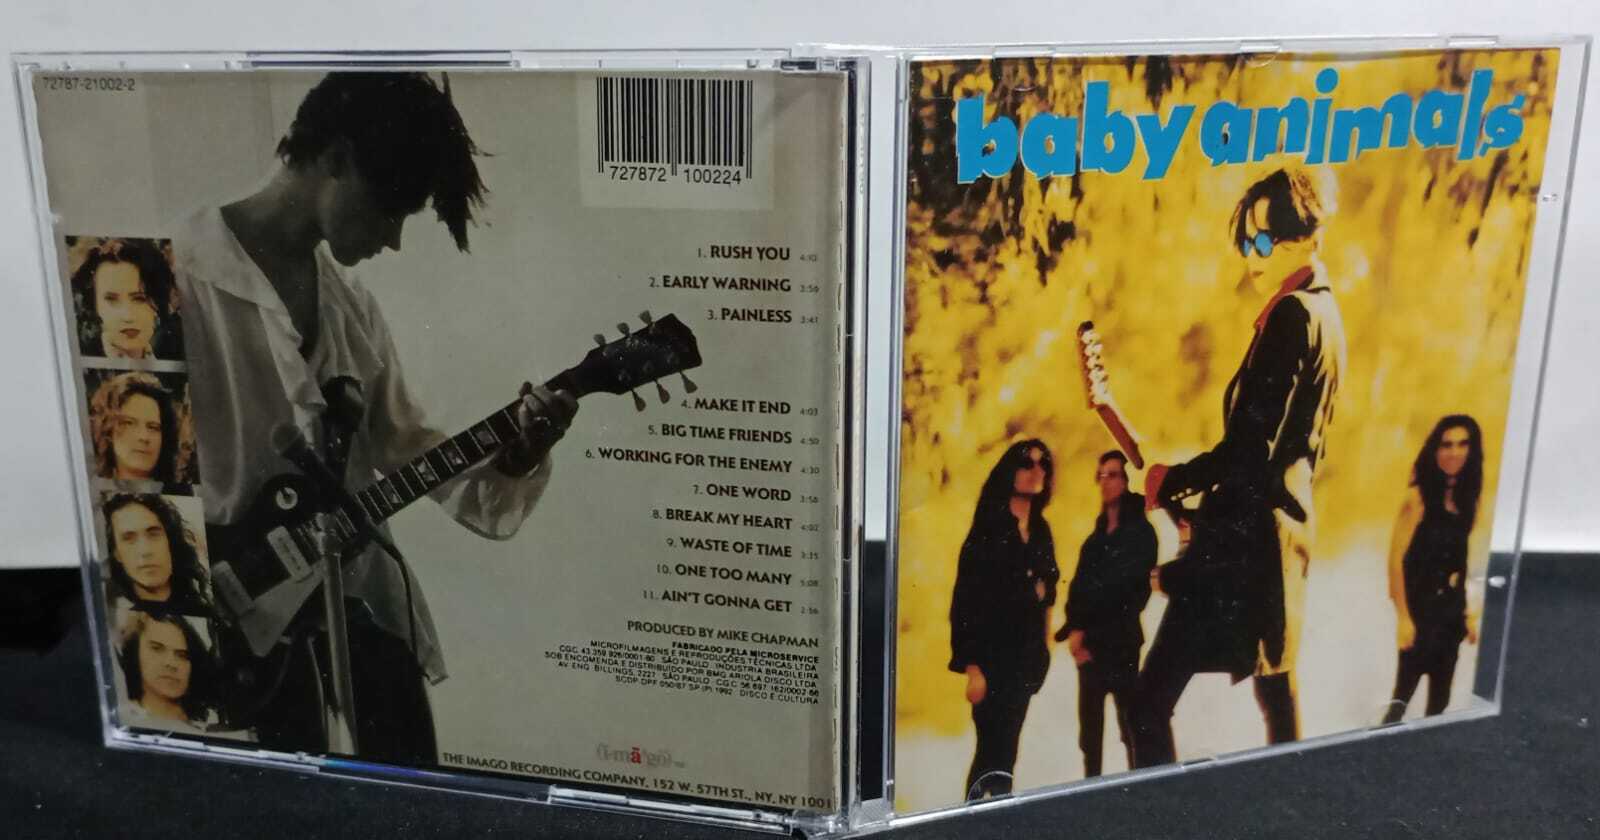 CD - Baby Animals - 1992